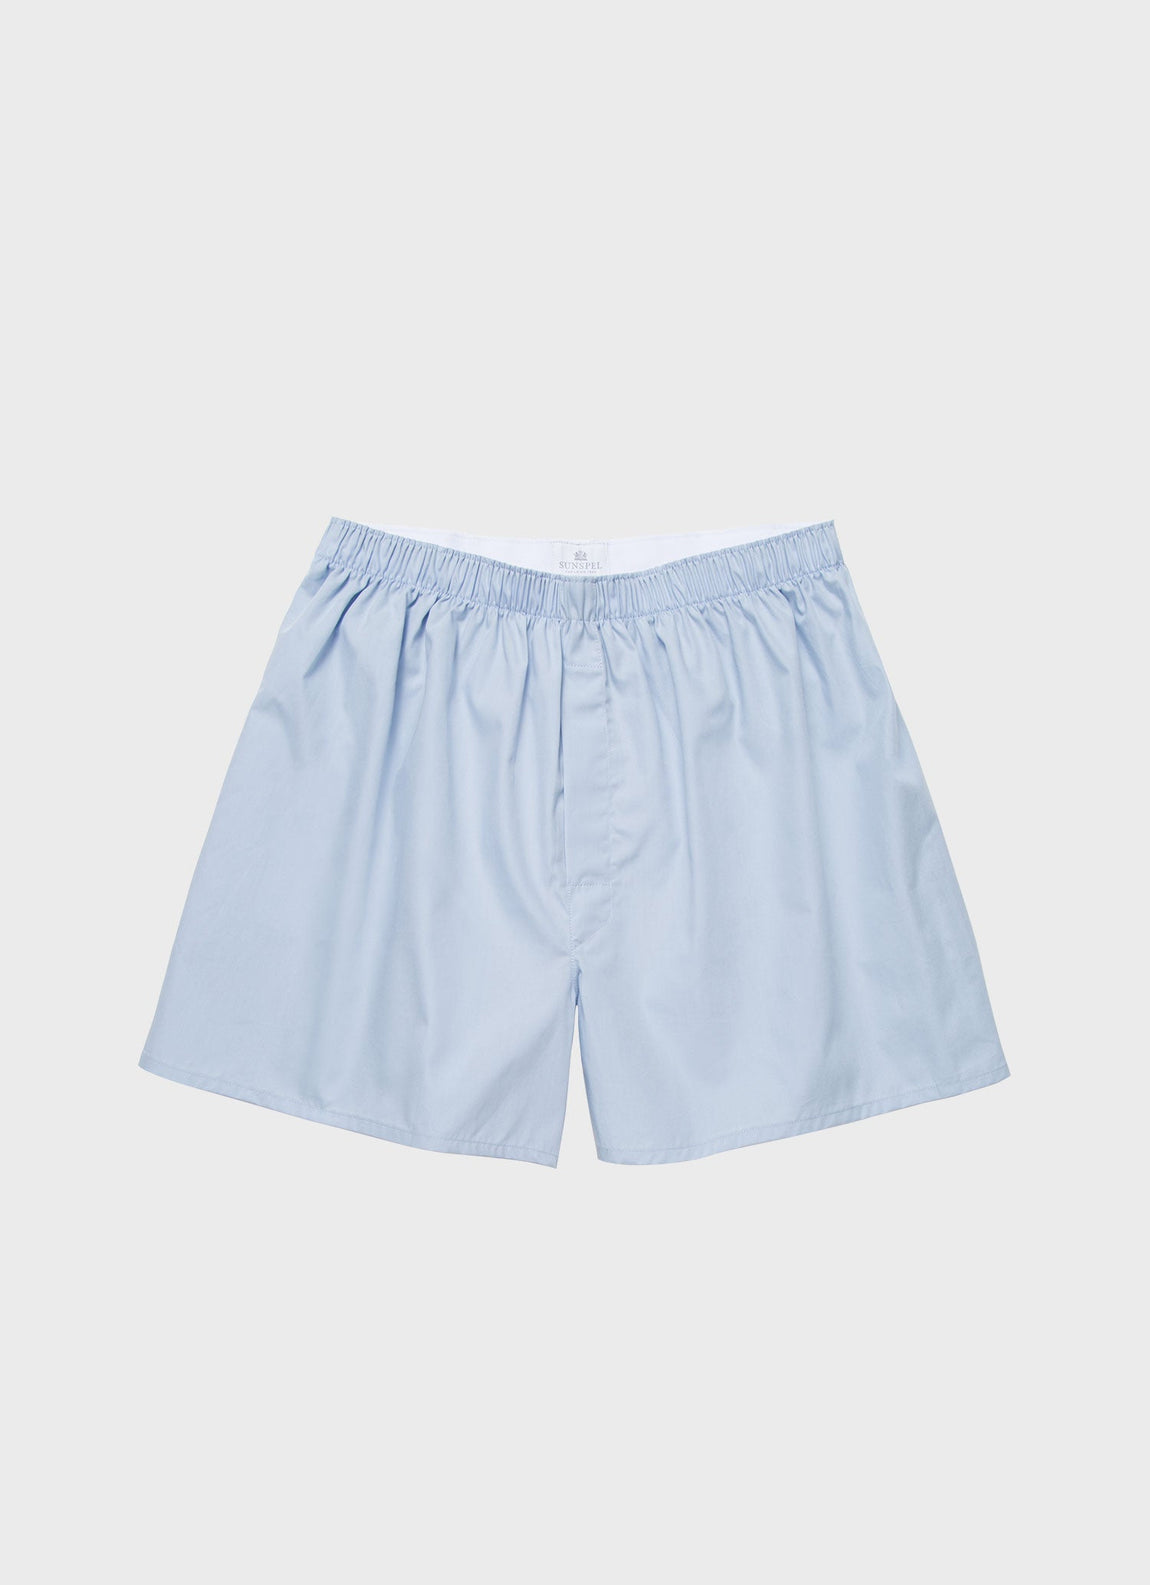 Men's Summer Cotton Half Pants in Nepal - Buy Shorts & Half Pants